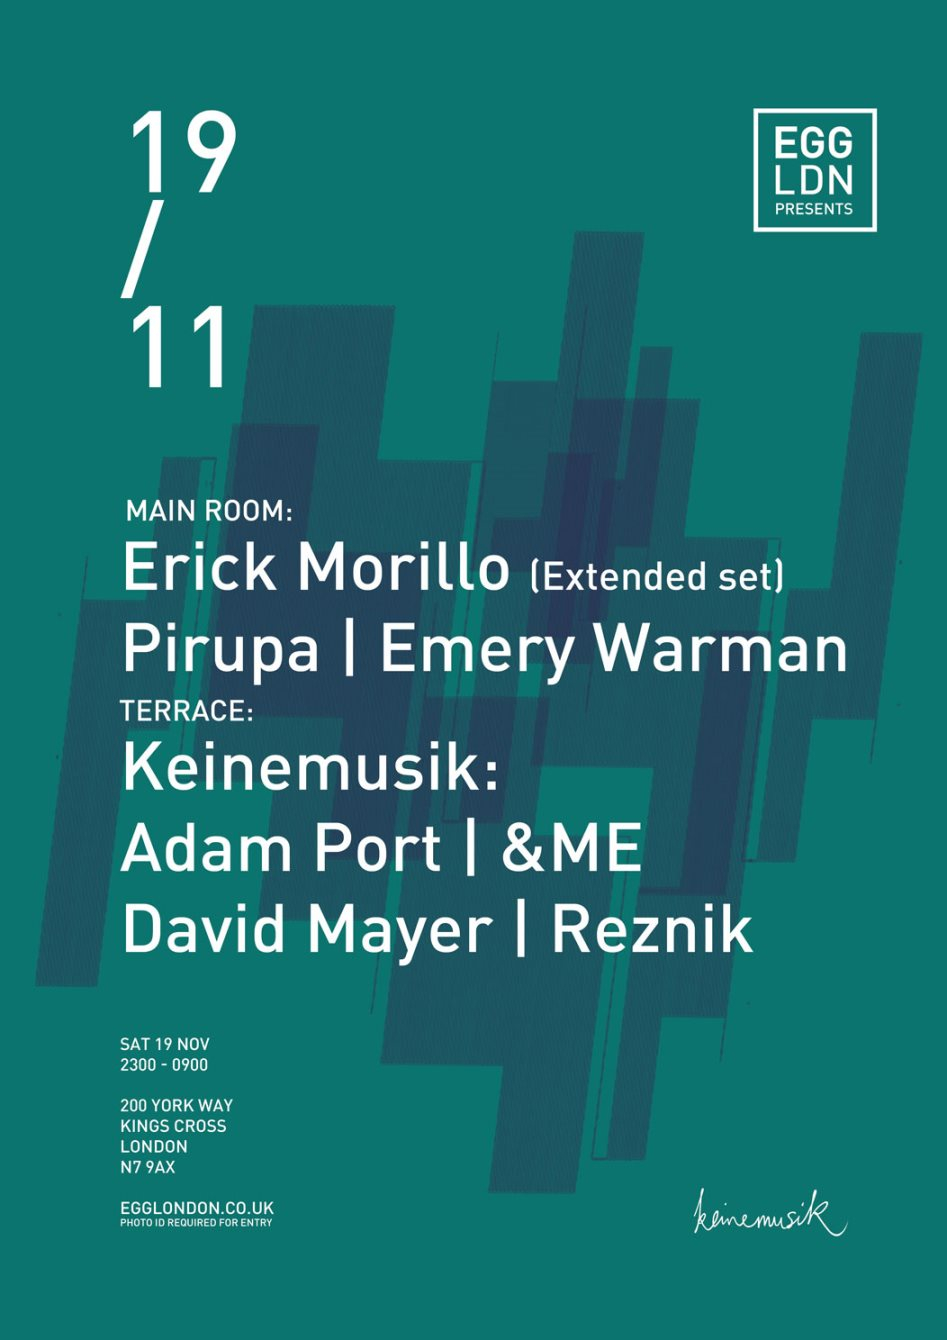 Egg presents: Erick Morillo (Extended Set), Pirupa + Keinemusik - &Me, Adam Port, David Mayer - Flyer front